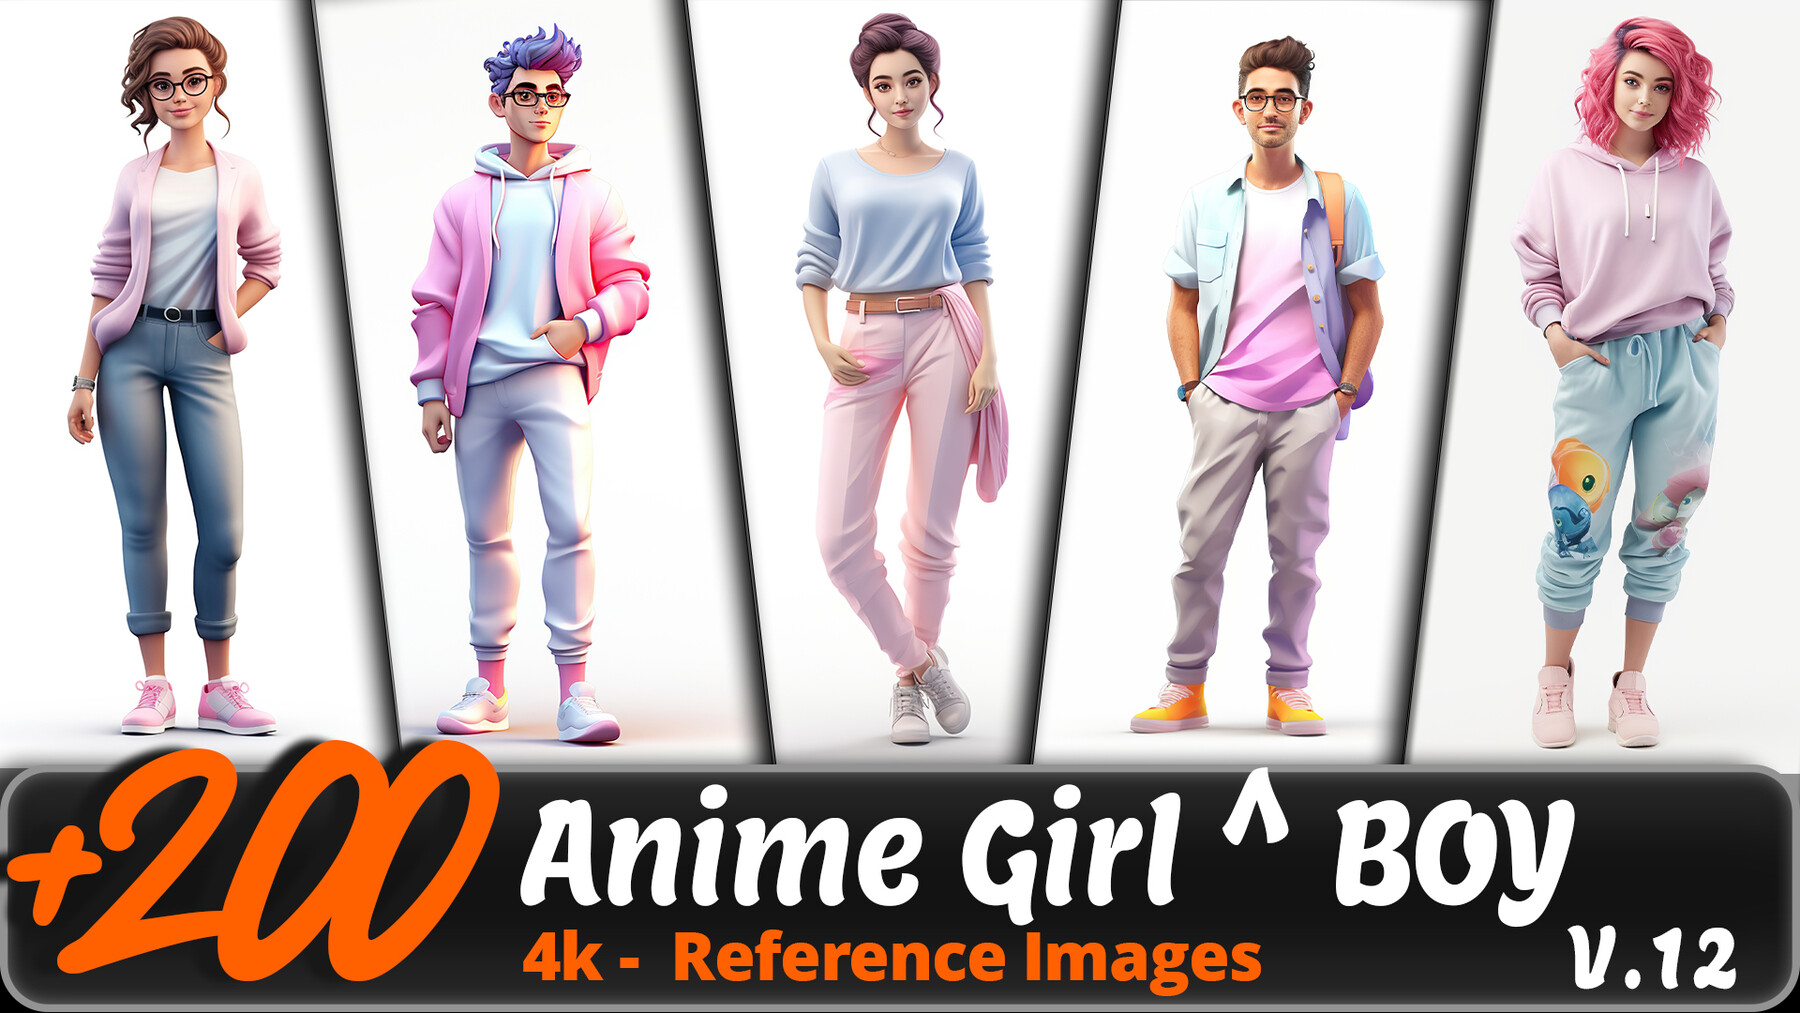 ArtStation - anime girl anime boy